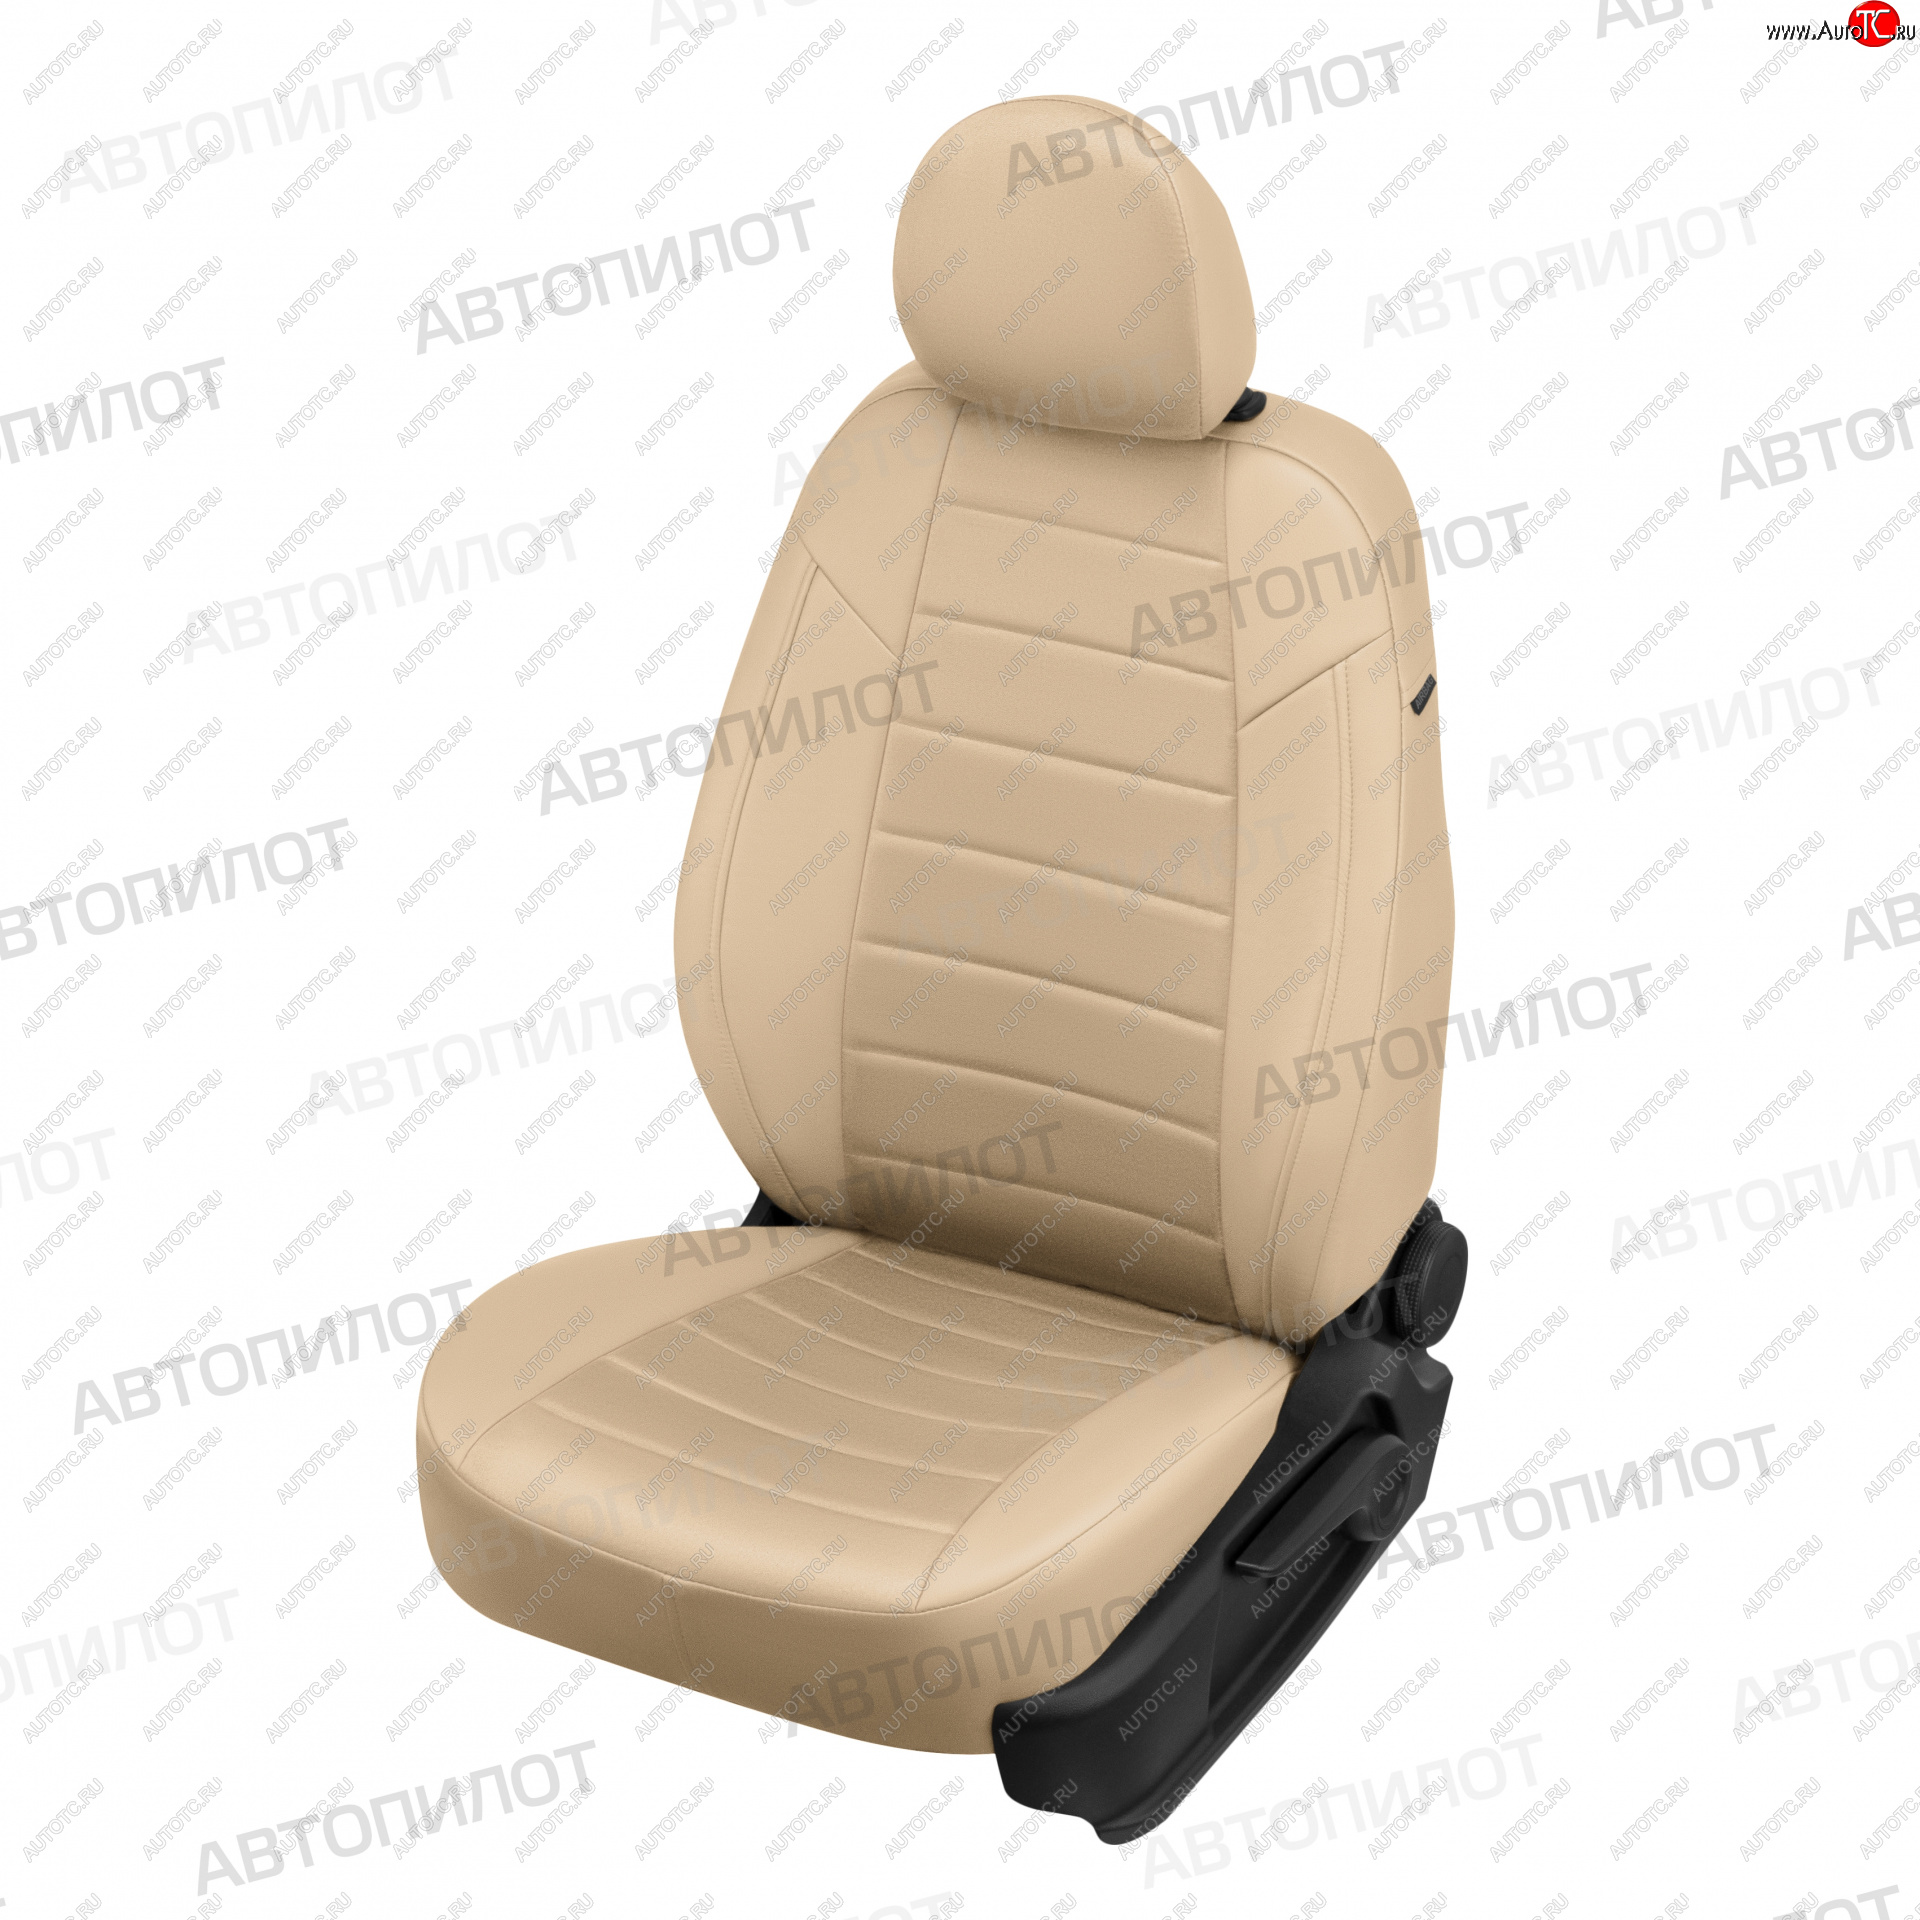 7 499 р. Чехлы сидений (экокожа/алькантара) Автопилот Chevrolet Lacetti универсал (2002-2013) (бежевый)